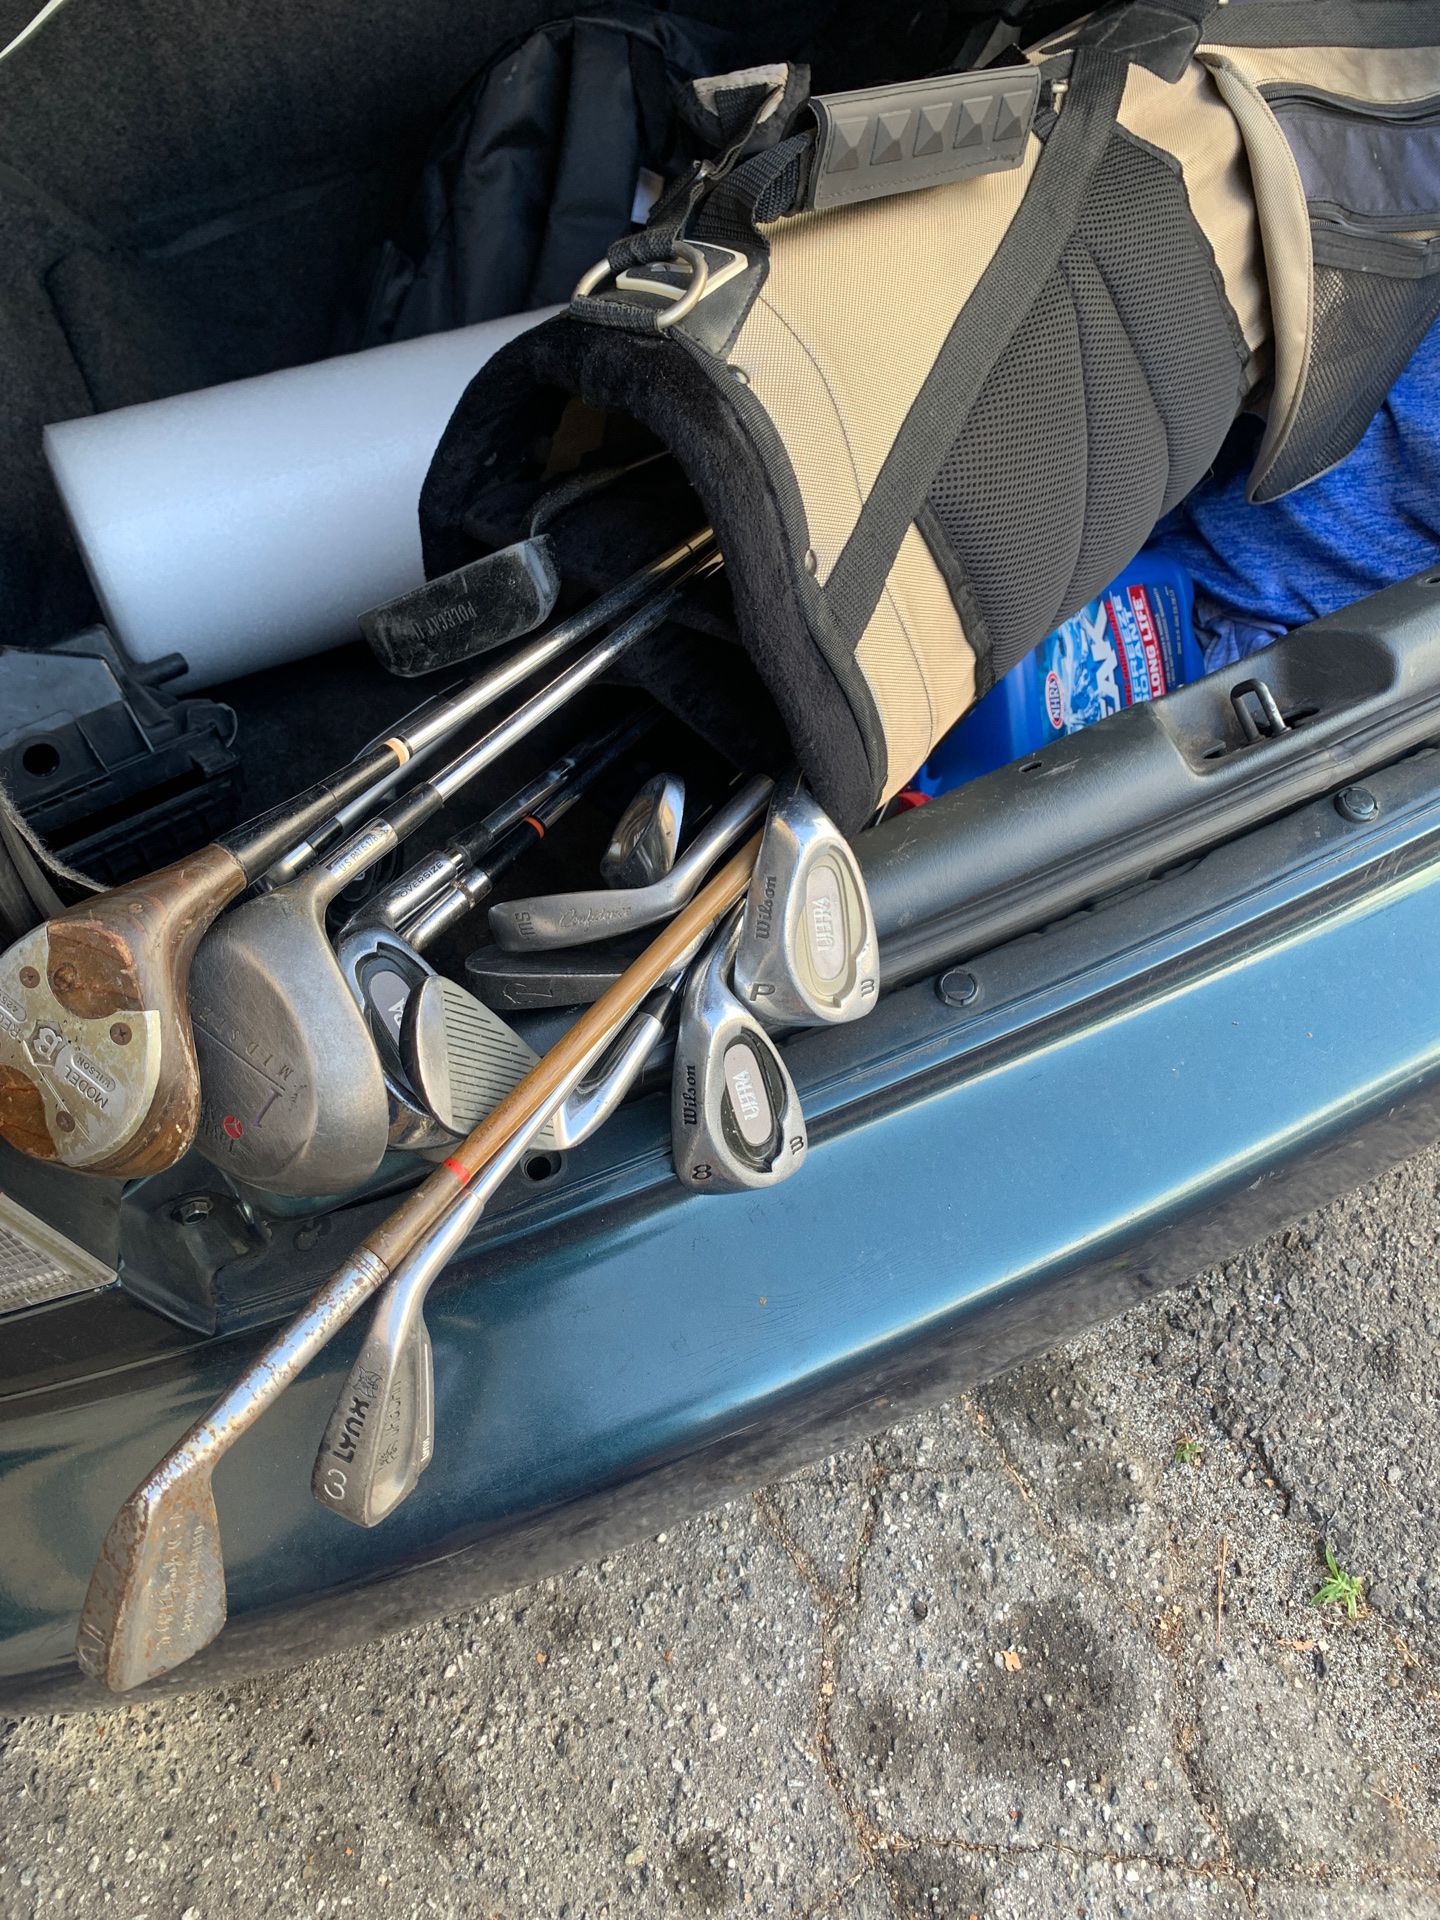 Free golf clubs